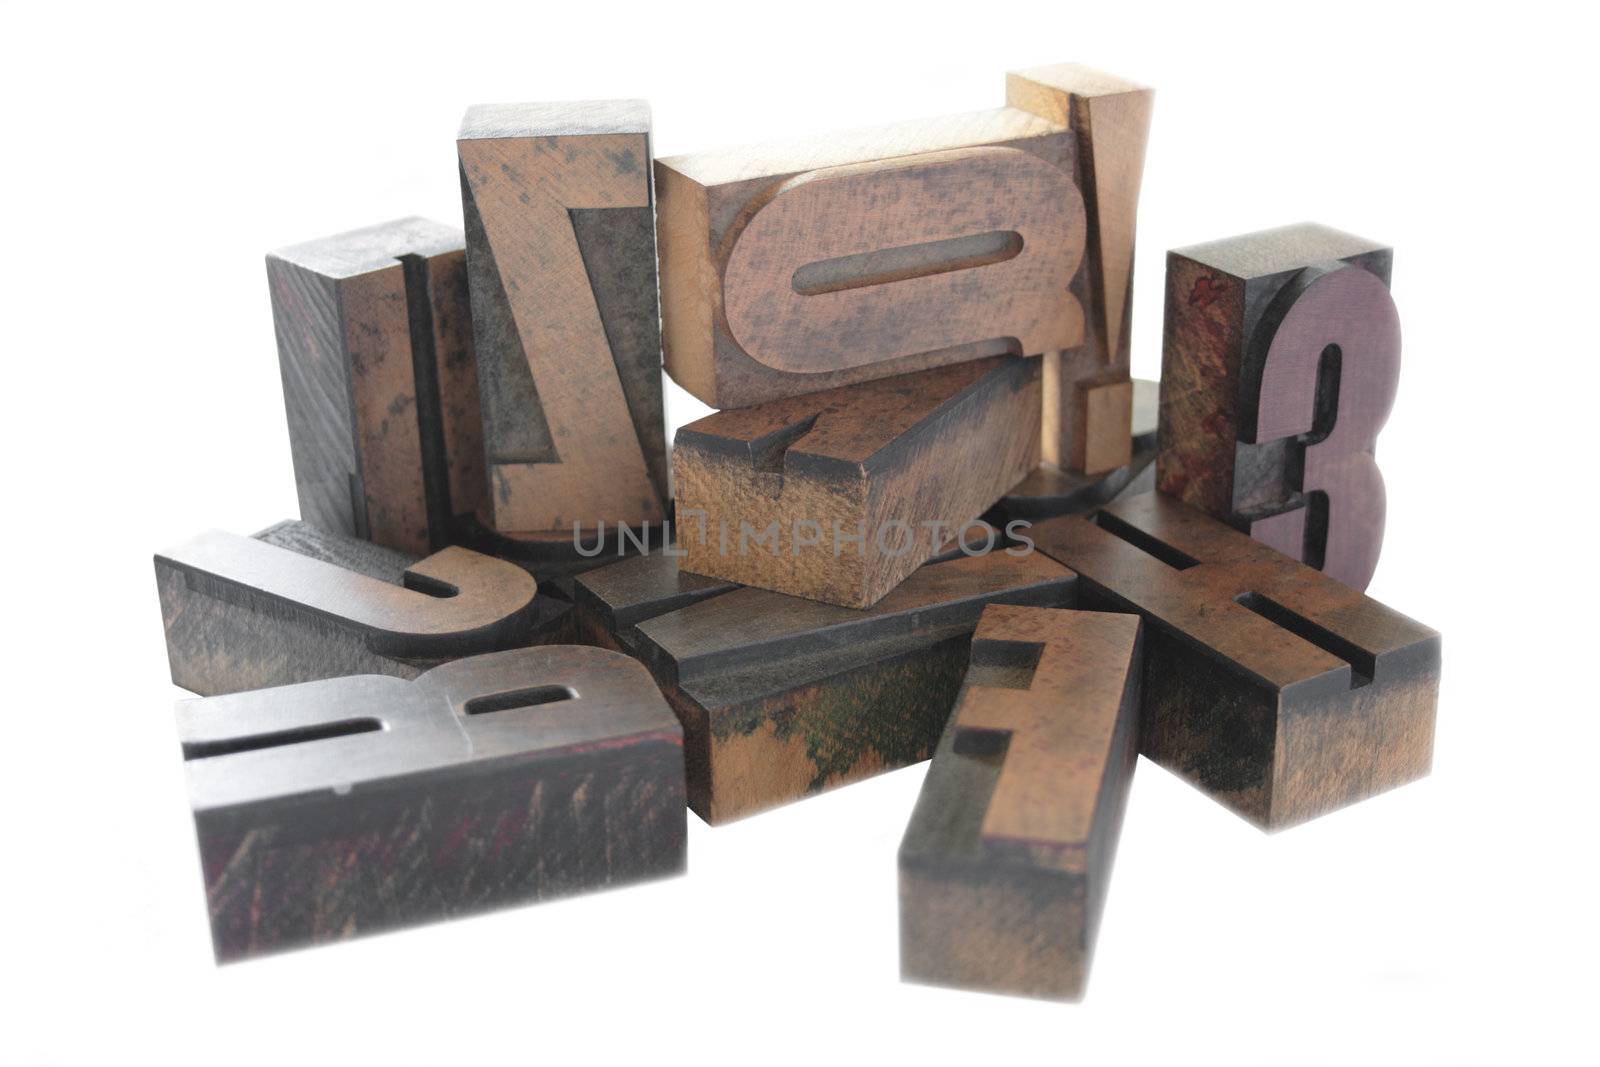 letterpress wood type arrangement by nebari